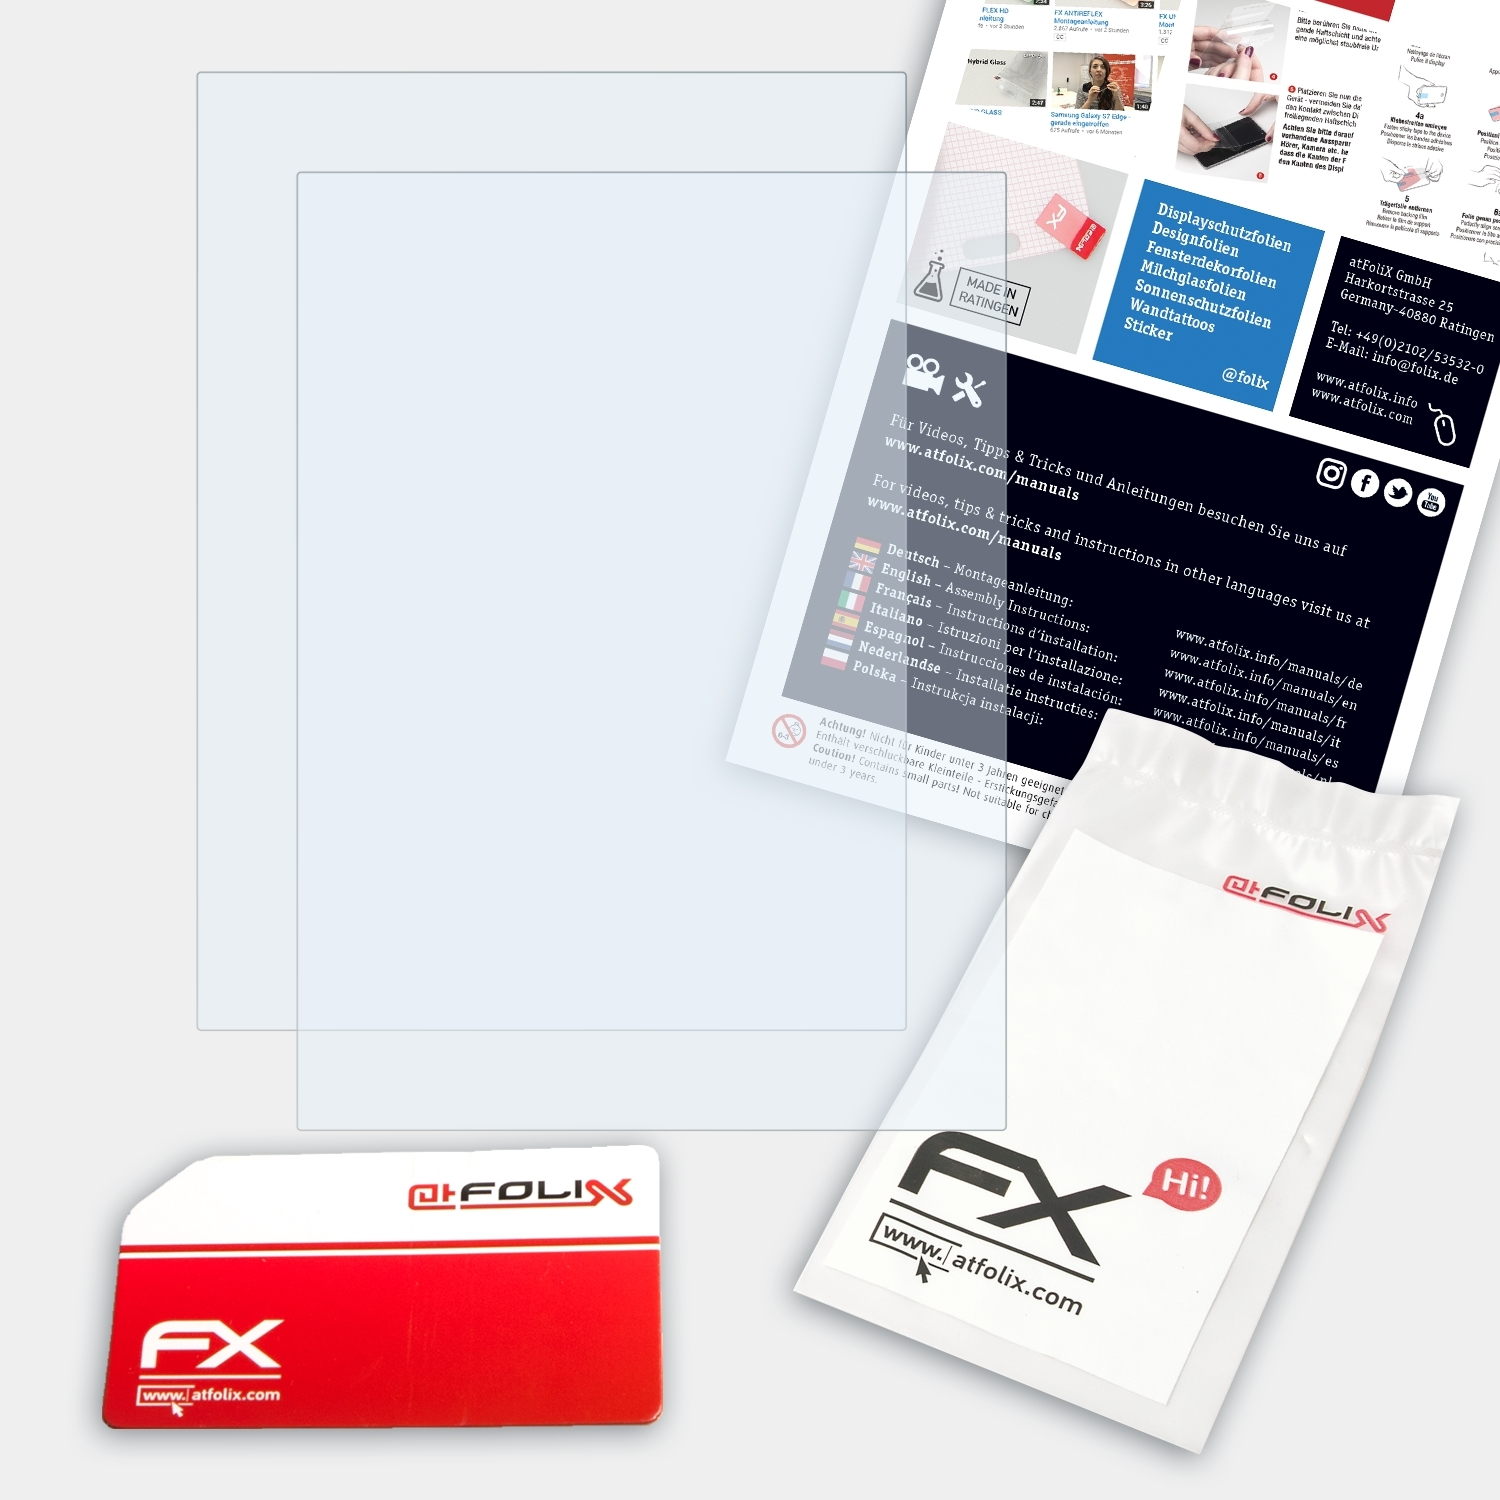 ATFOLIX 2x Moon Color PocketBook Displayschutz(für FX-Clear Silver)